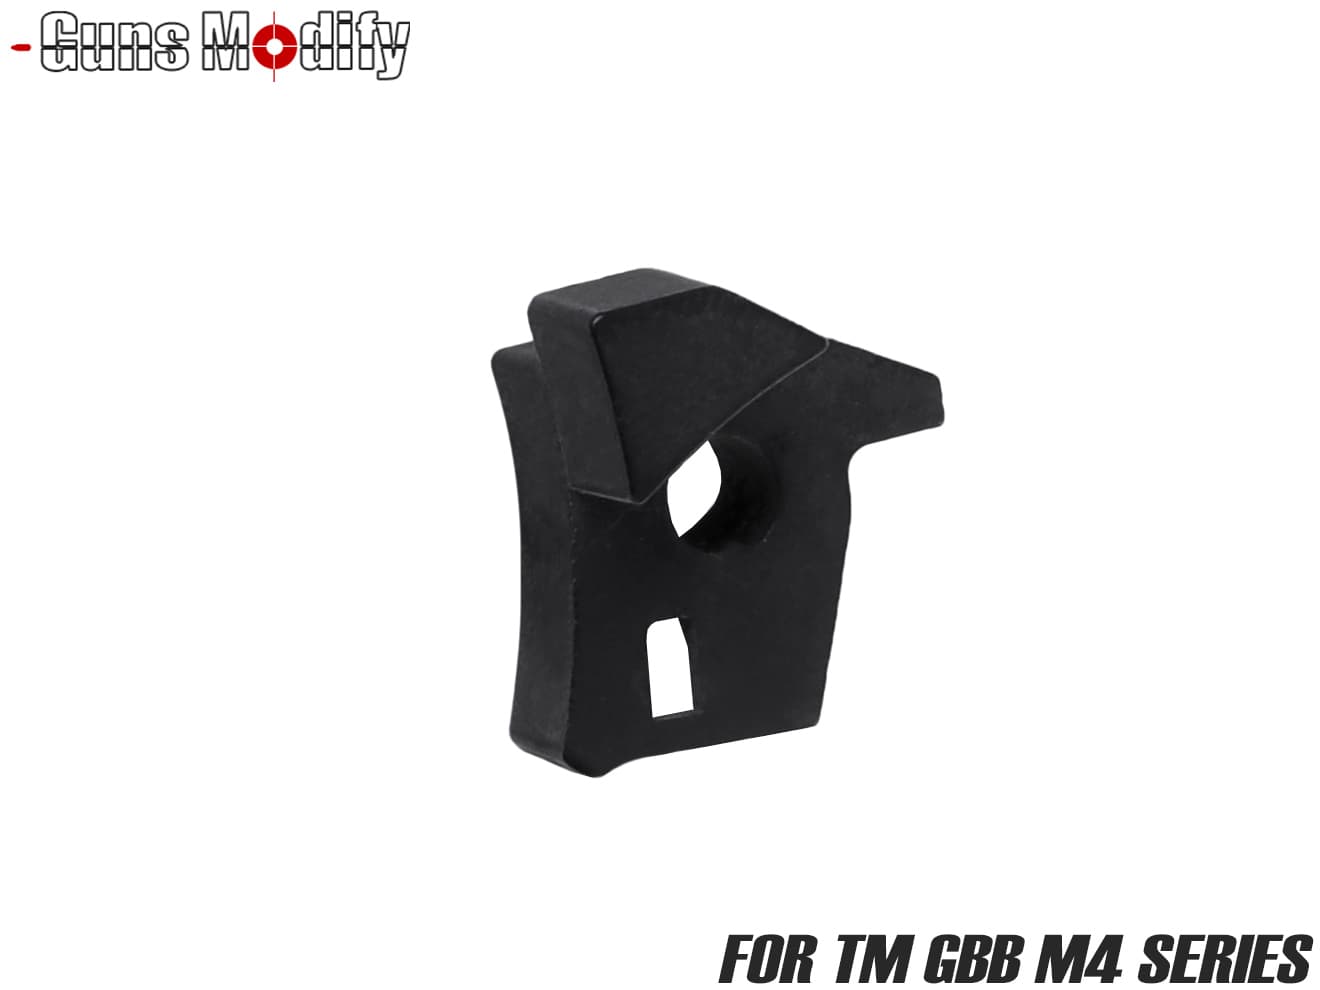 Guns Modify MIM スチール フルオートシアー for TM GBB M4◆カスタム パーツ 強度アップ MIM製法 強化 丈夫 自由度 精度 エッジ 再現性 耐食性 アップグレード